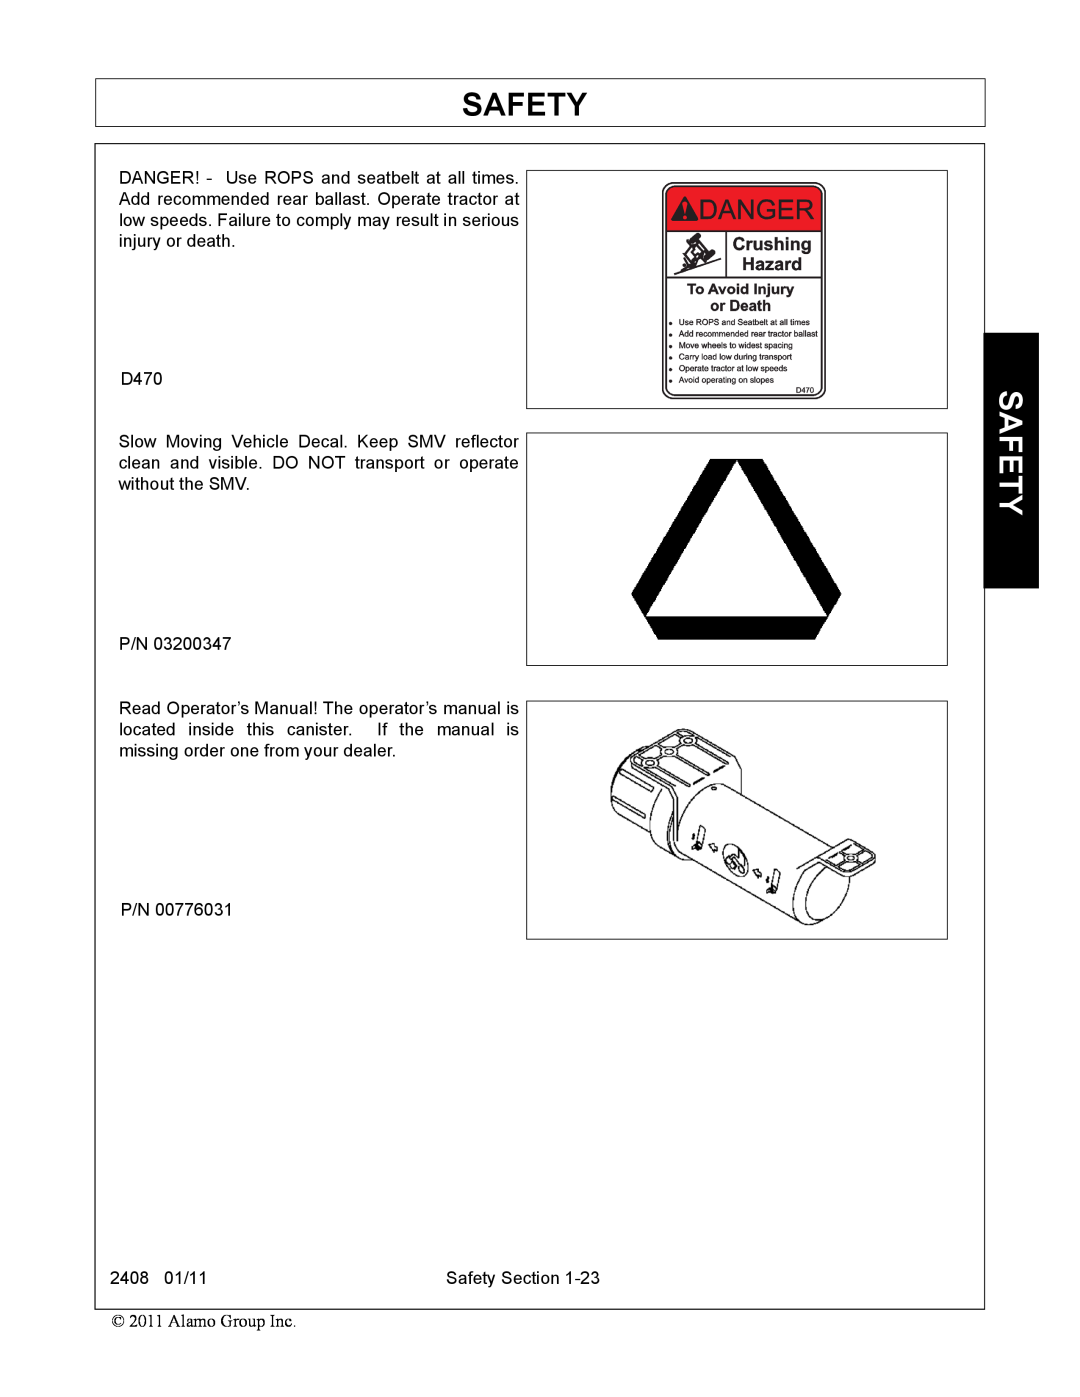 Rhino Mounts 2408 manual Safety 